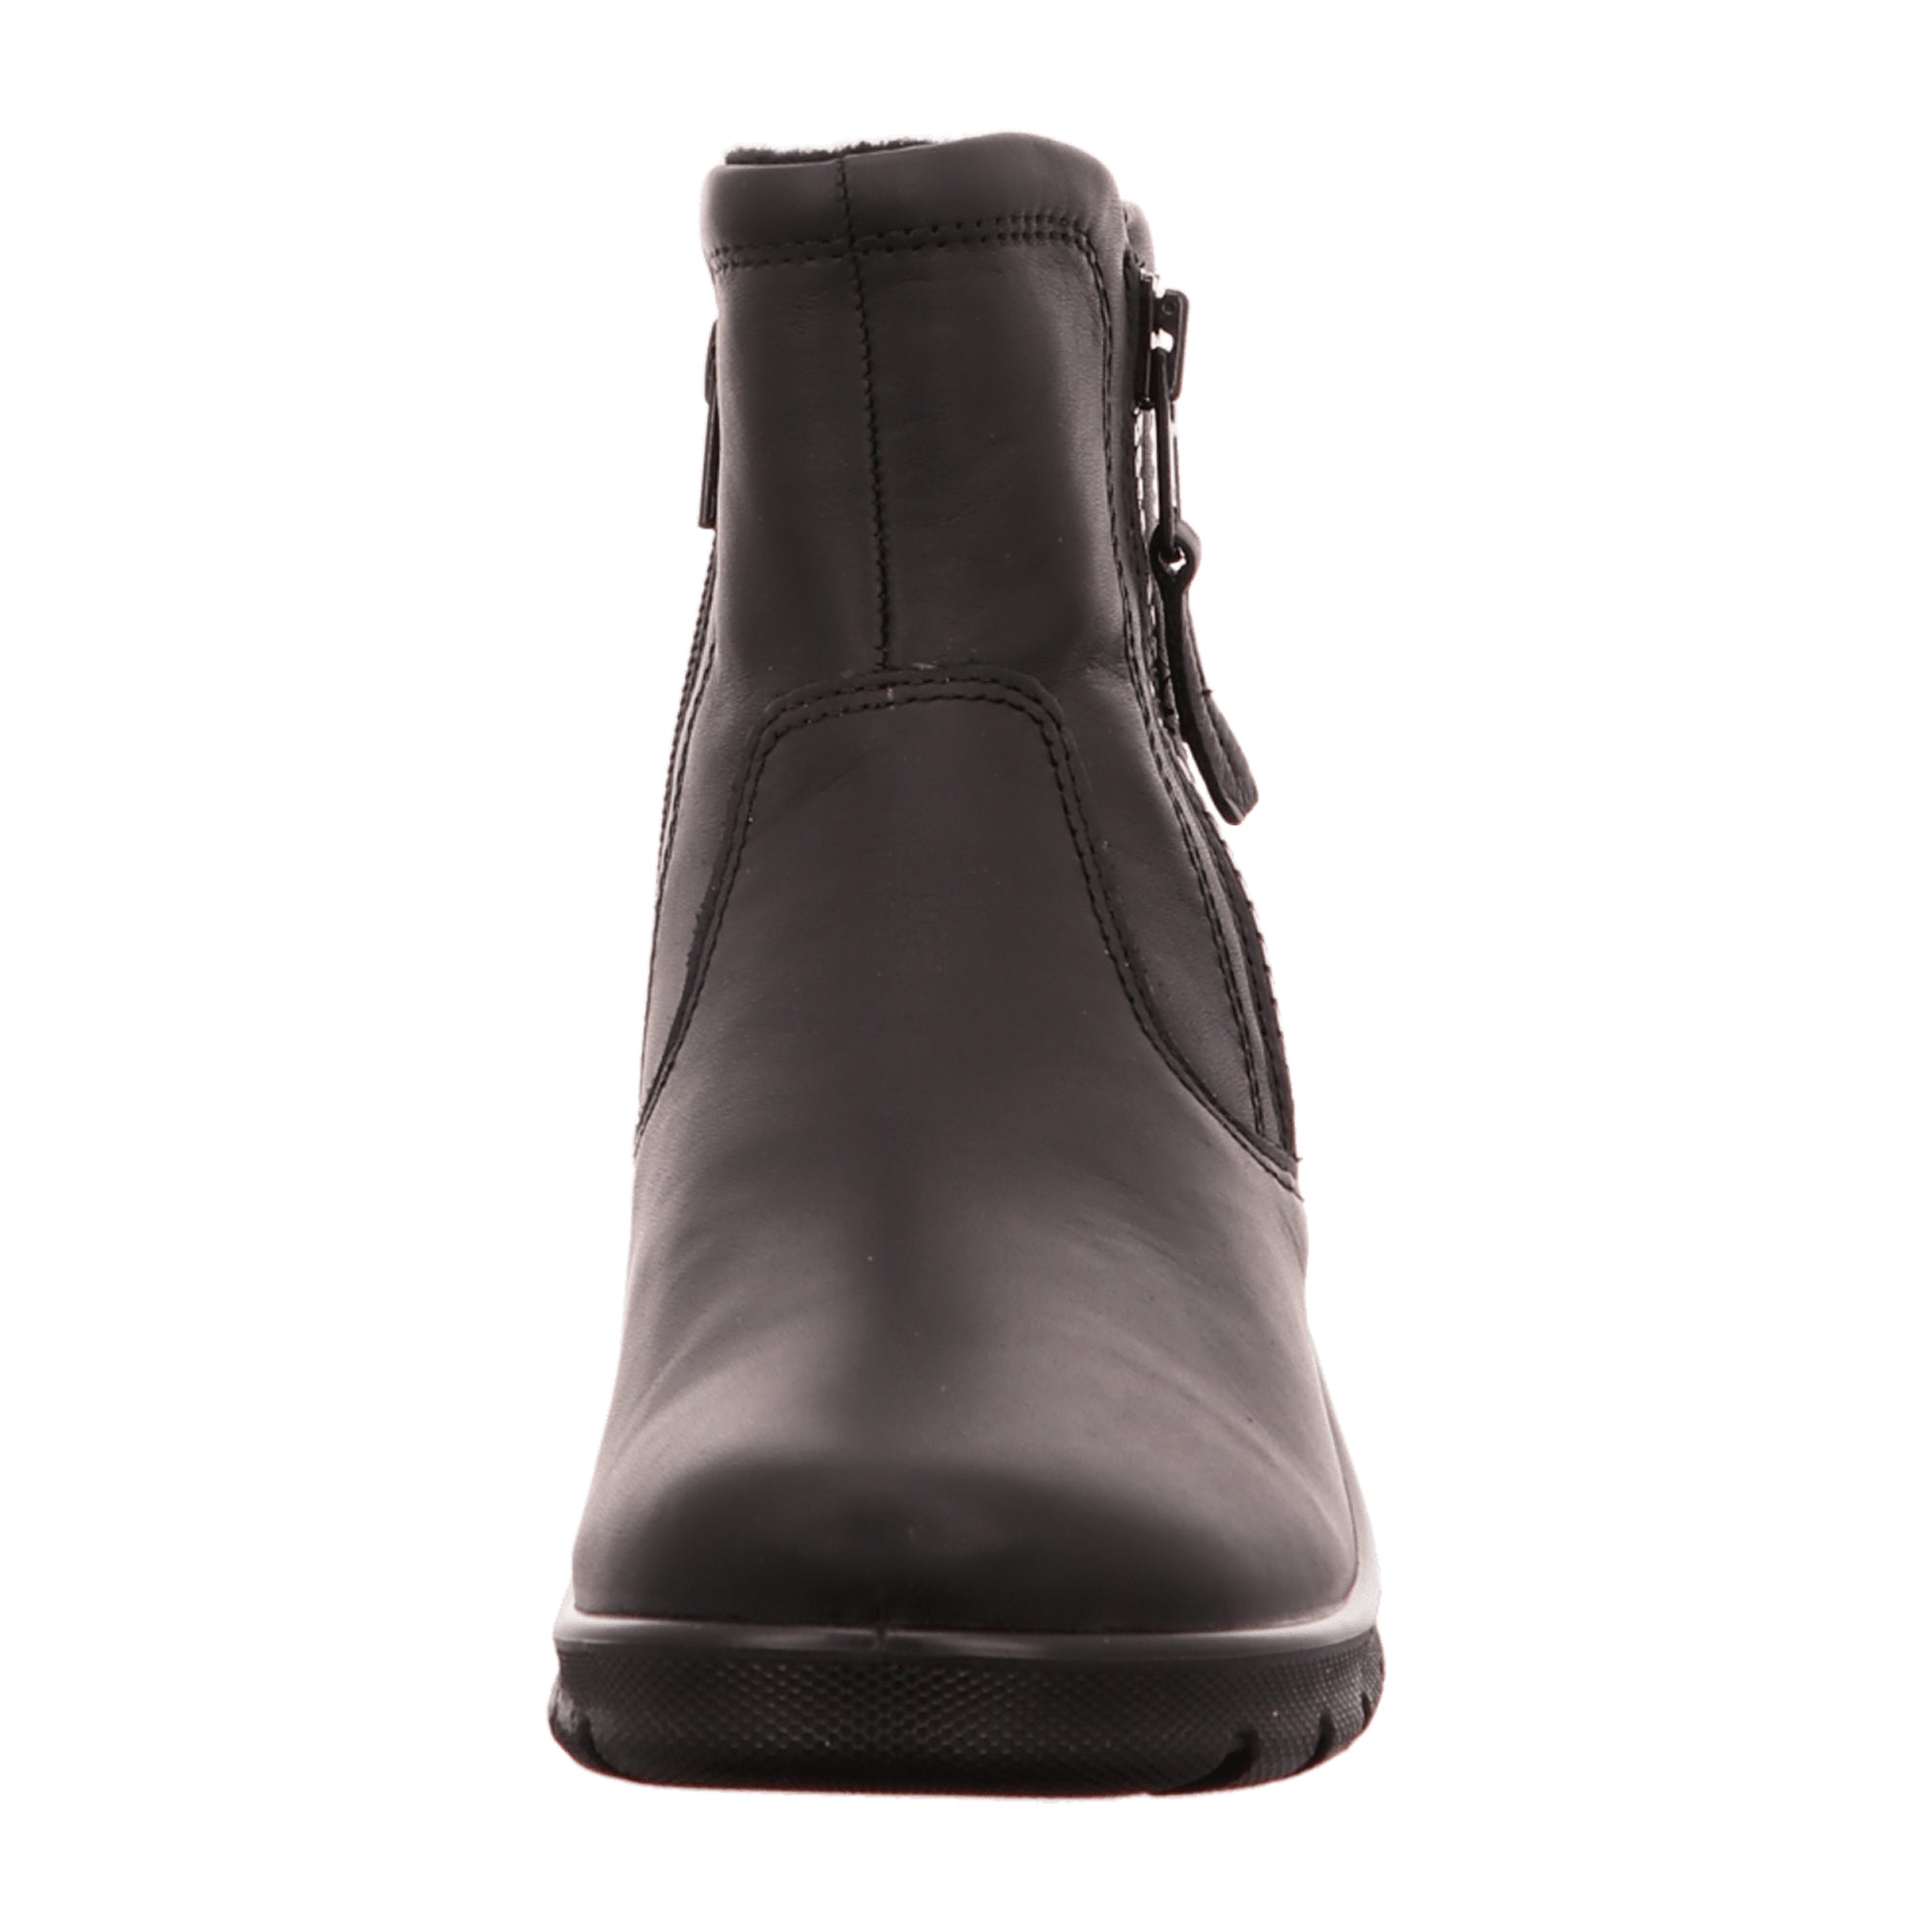 Ecco Babett Women's Boots - Durable & Stylish in Classic Black